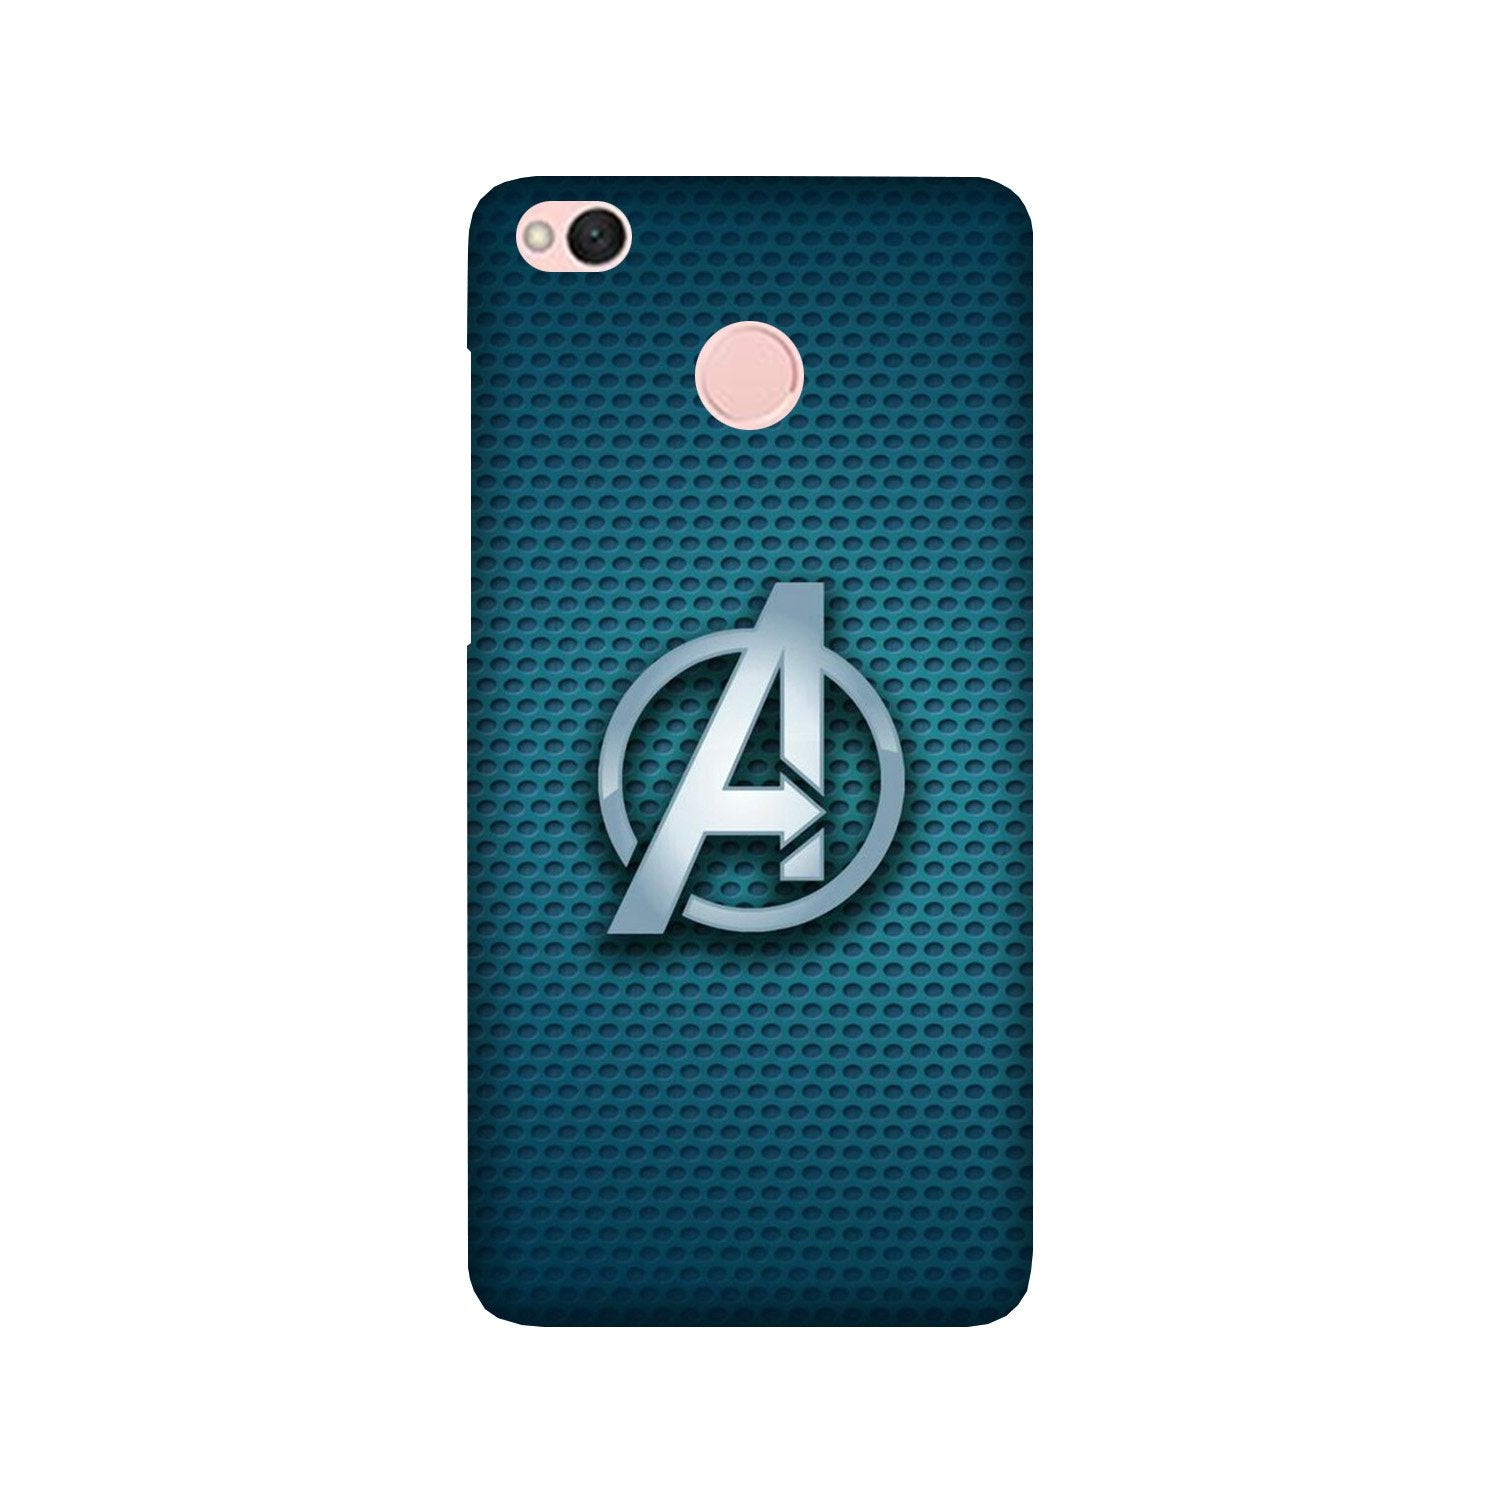 Avengers Case for Redmi 4 (Design No. 246)